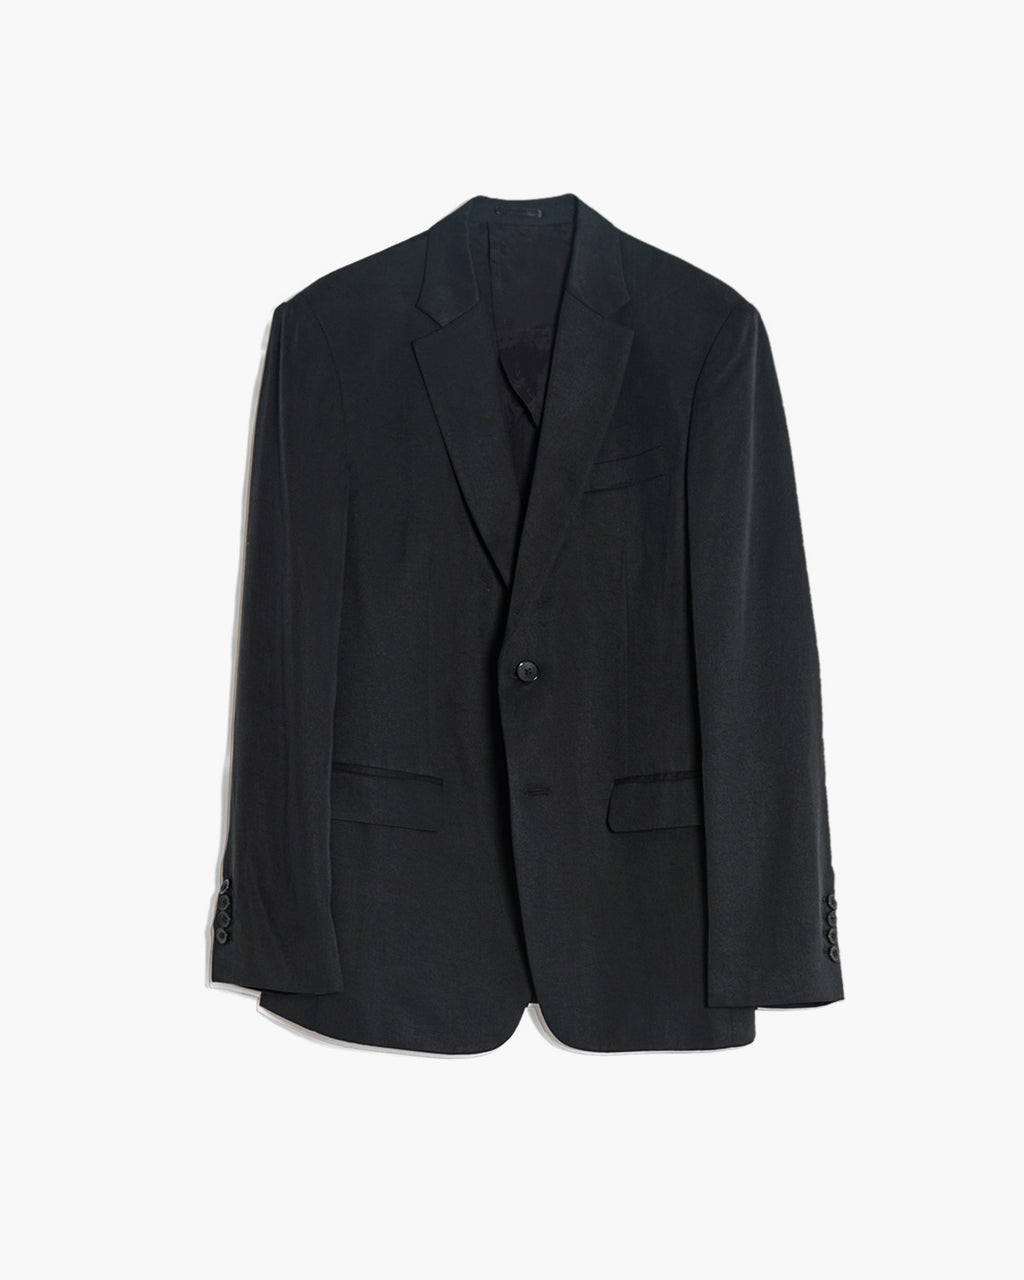 ROSEN-S Professional Suit Jacket in Midnight Grey Silk Linen Sz 2